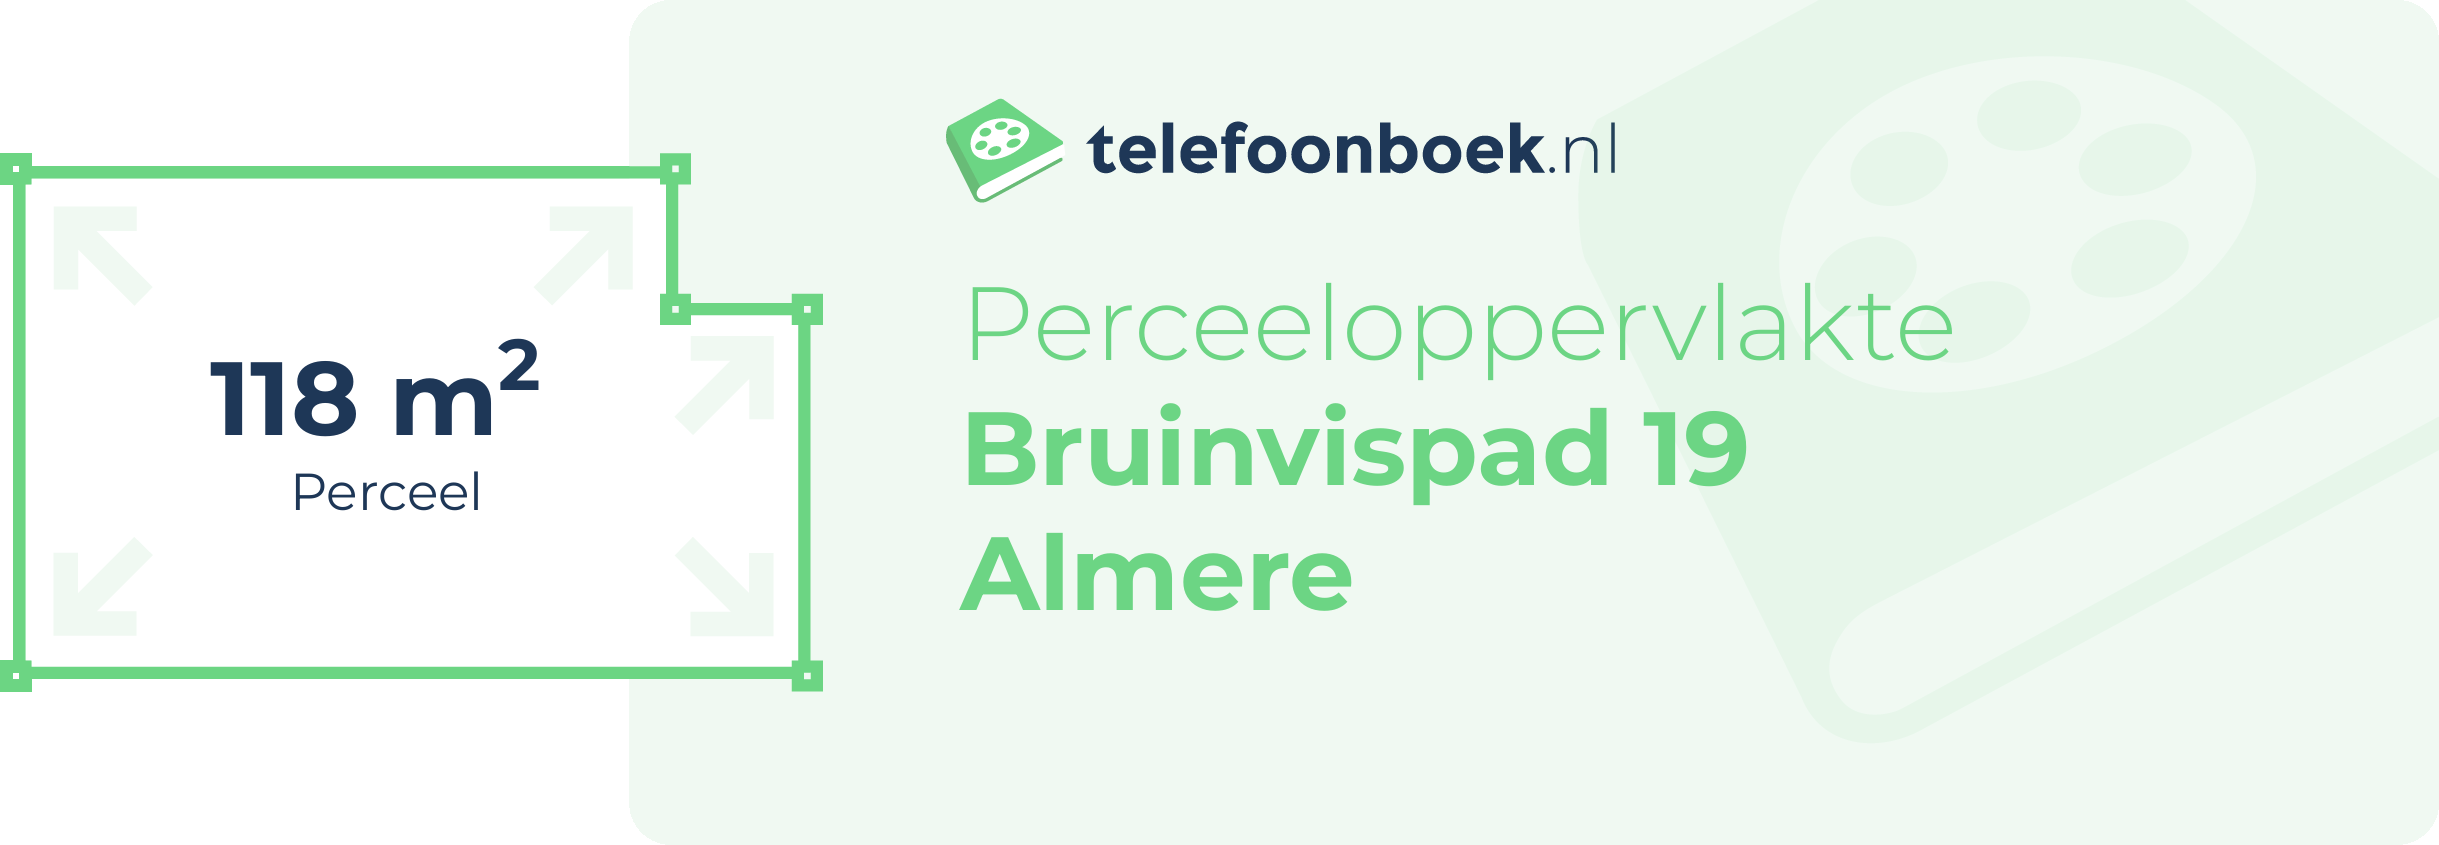 Perceeloppervlakte Bruinvispad 19 Almere